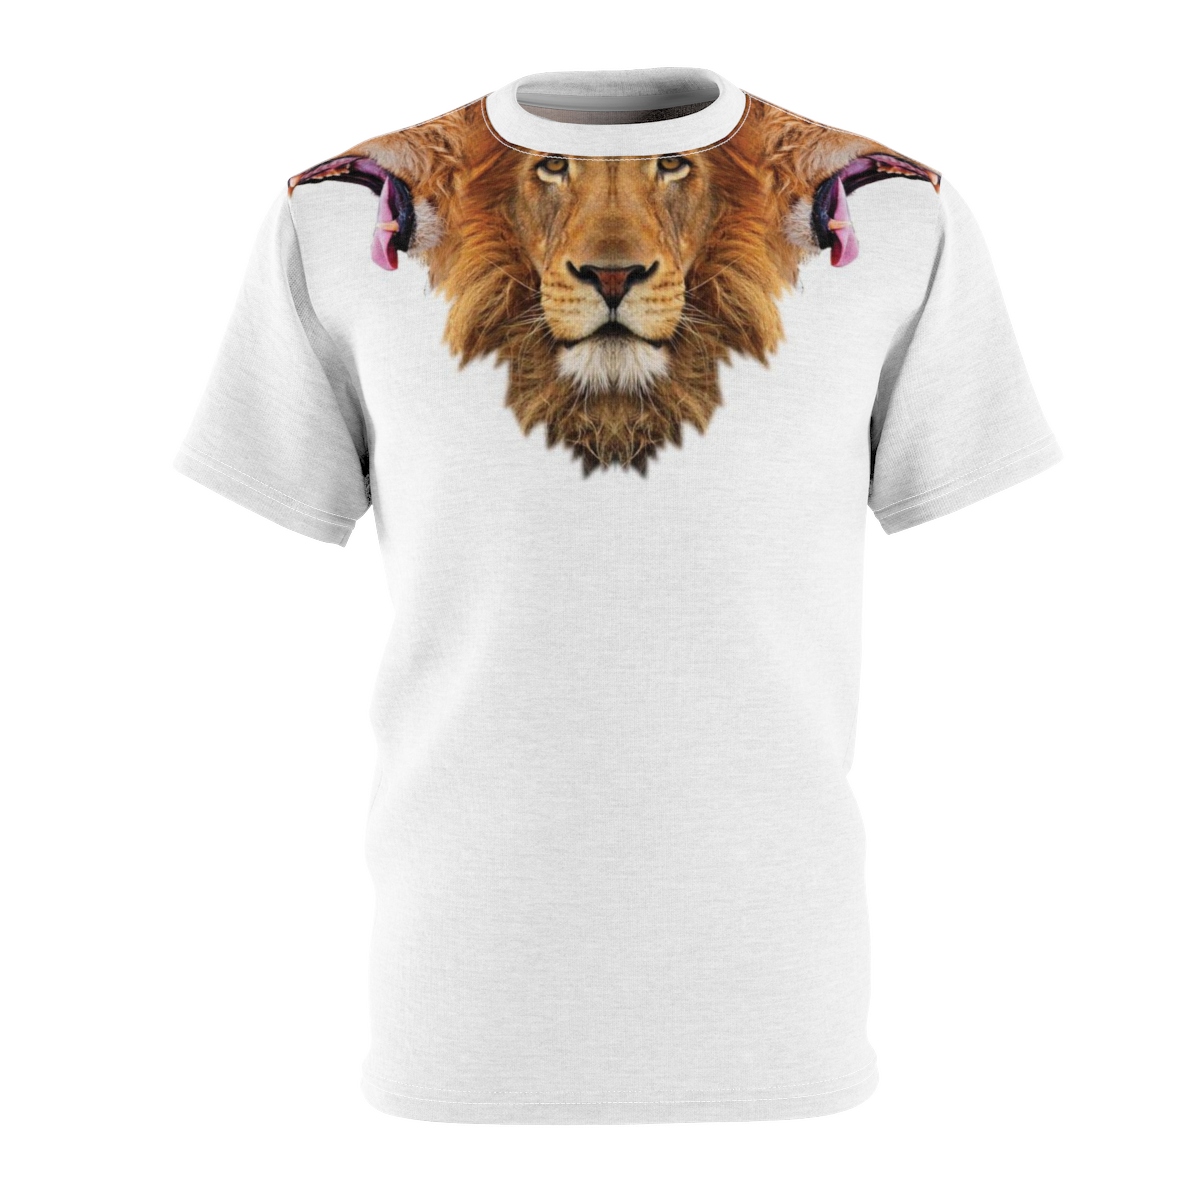 LeBron 3 Heads of the Lion Shirt v2 by GourmetKickz